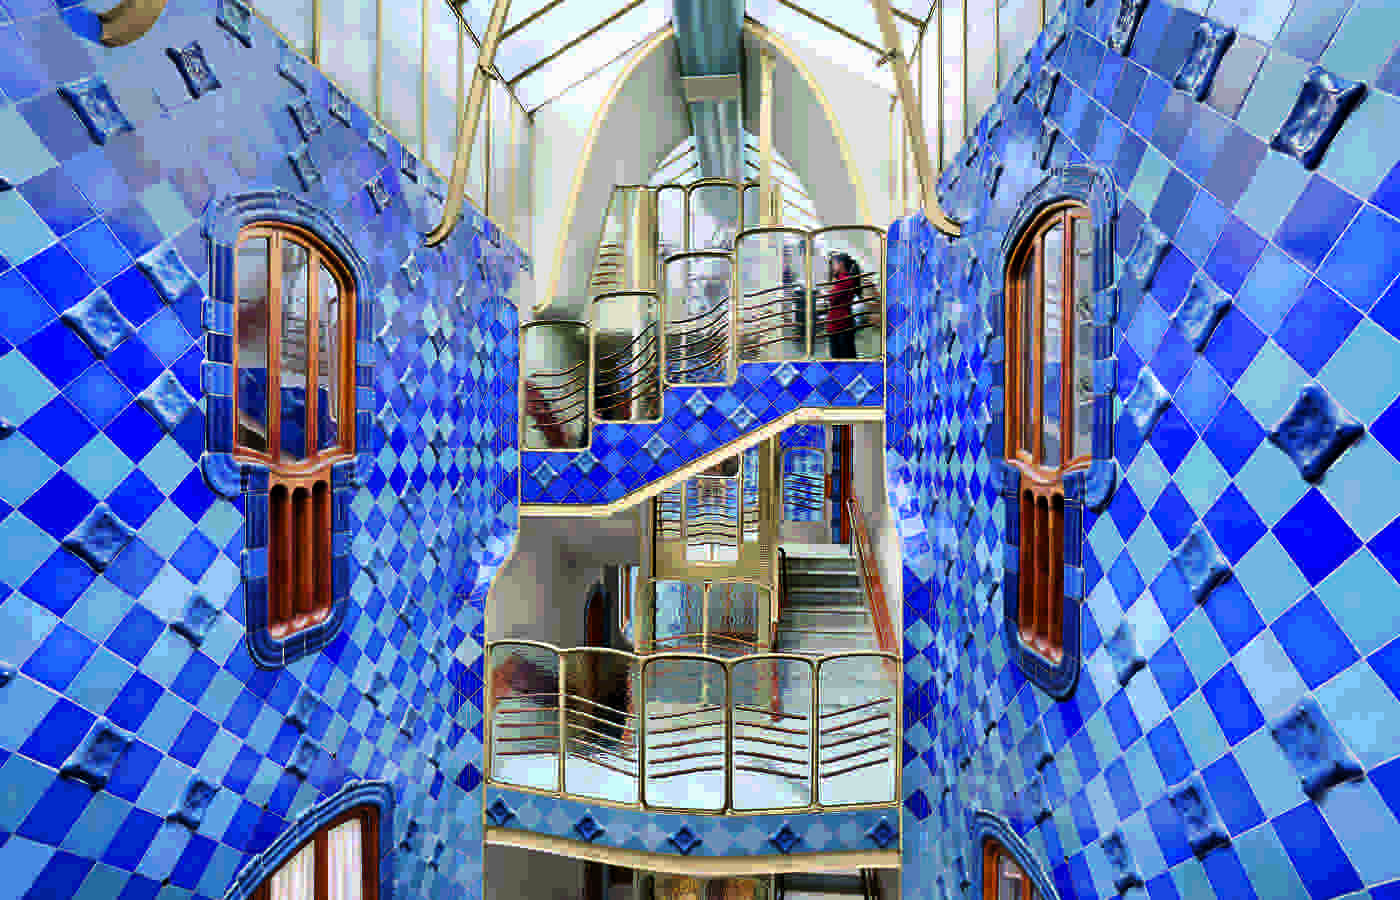 barcelona sehenswürdigkeiten gaudi Casa Batllo within the blue tiled stairwell